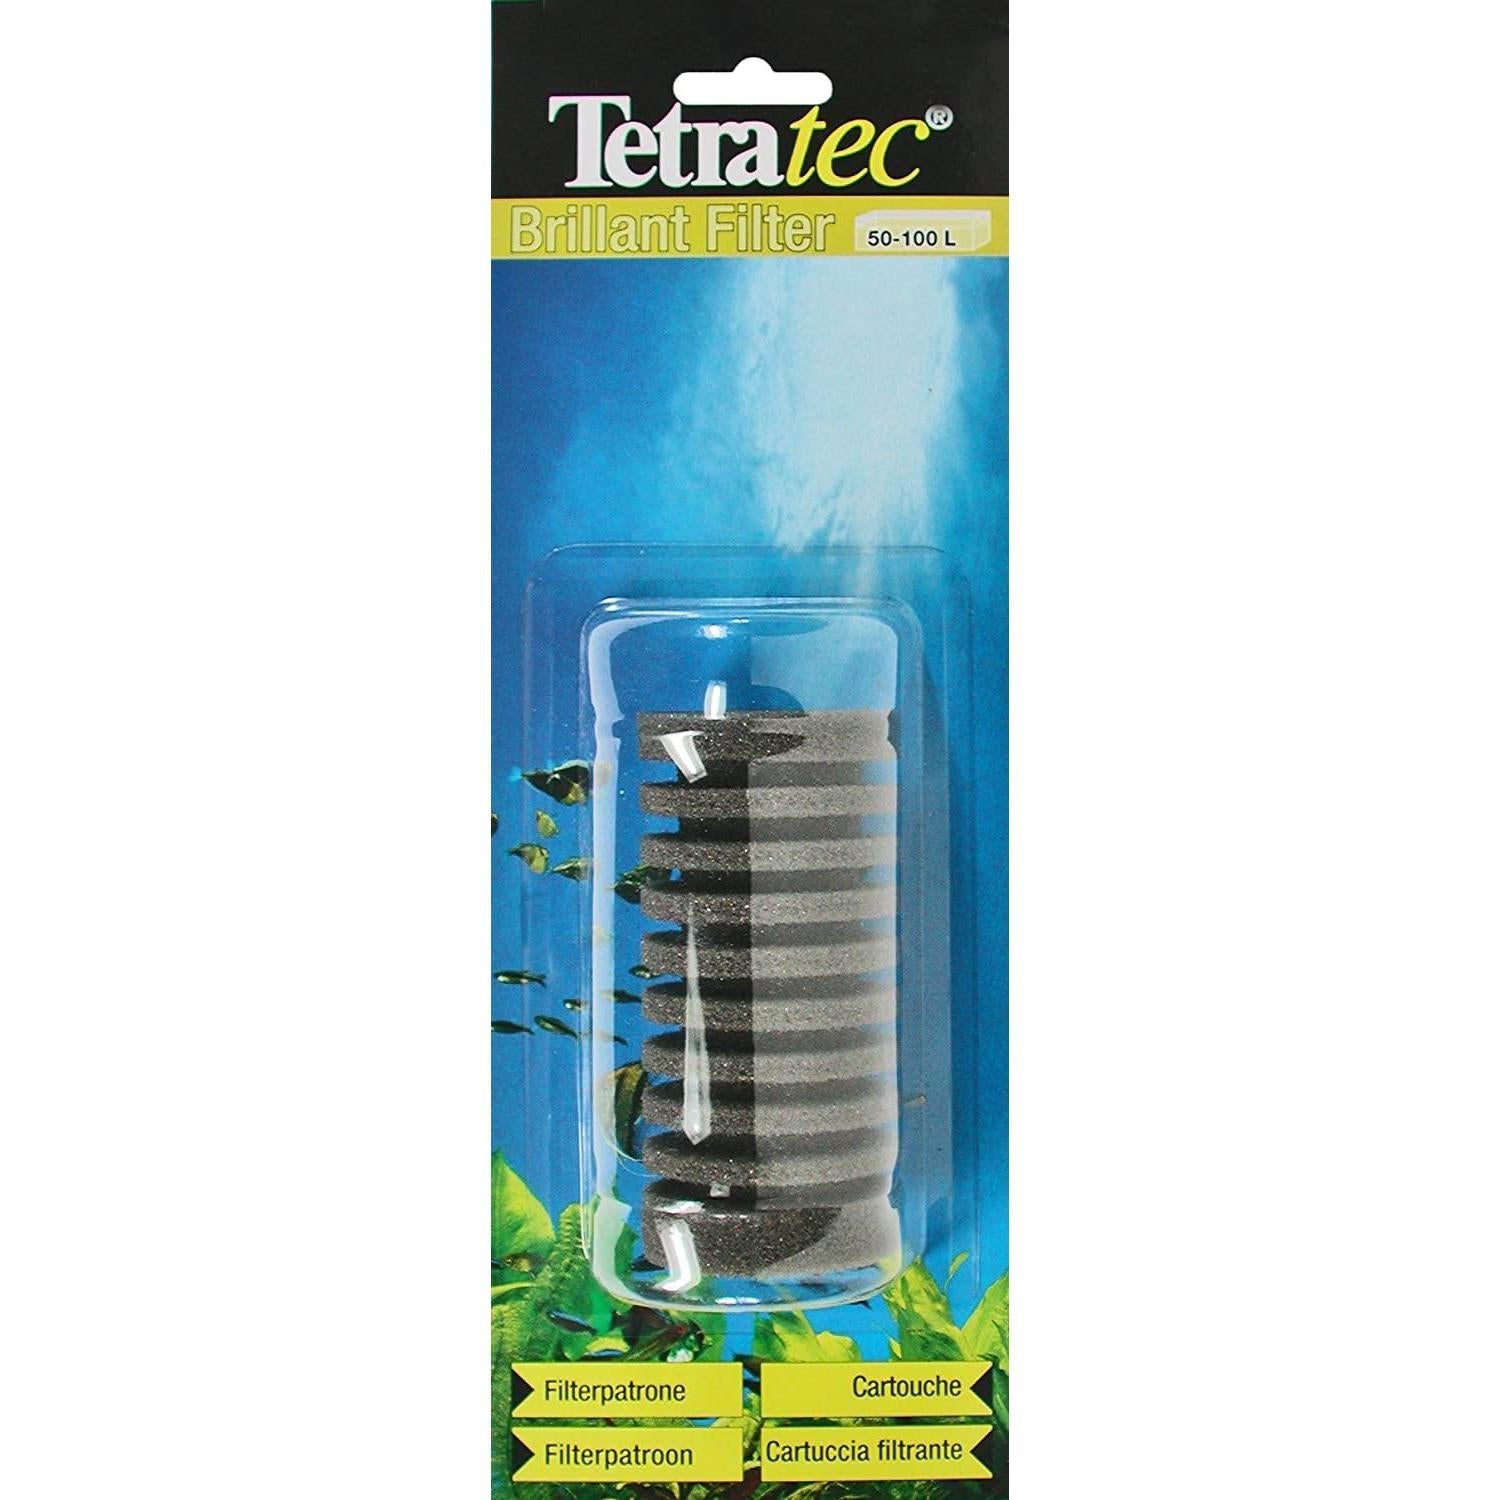 Tetra 751668 Tetratec Replacement Filter Cartridges for Brillant Filter